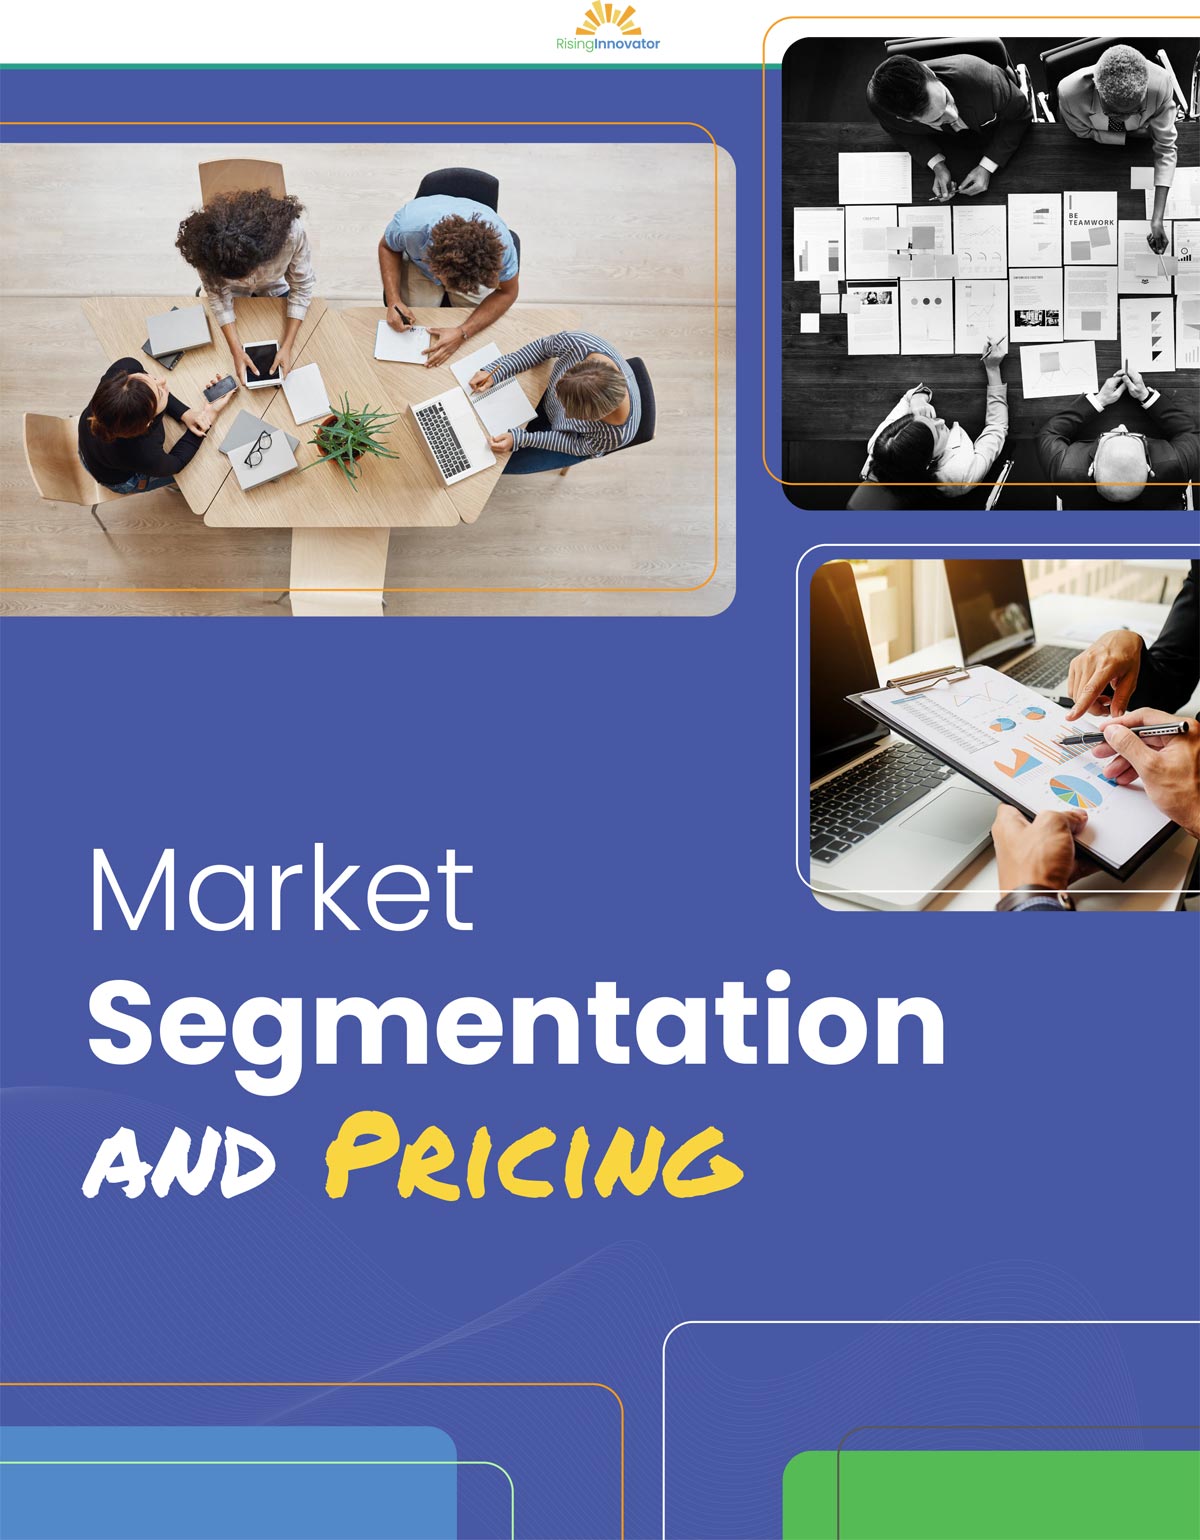 Market segmentation and pricing